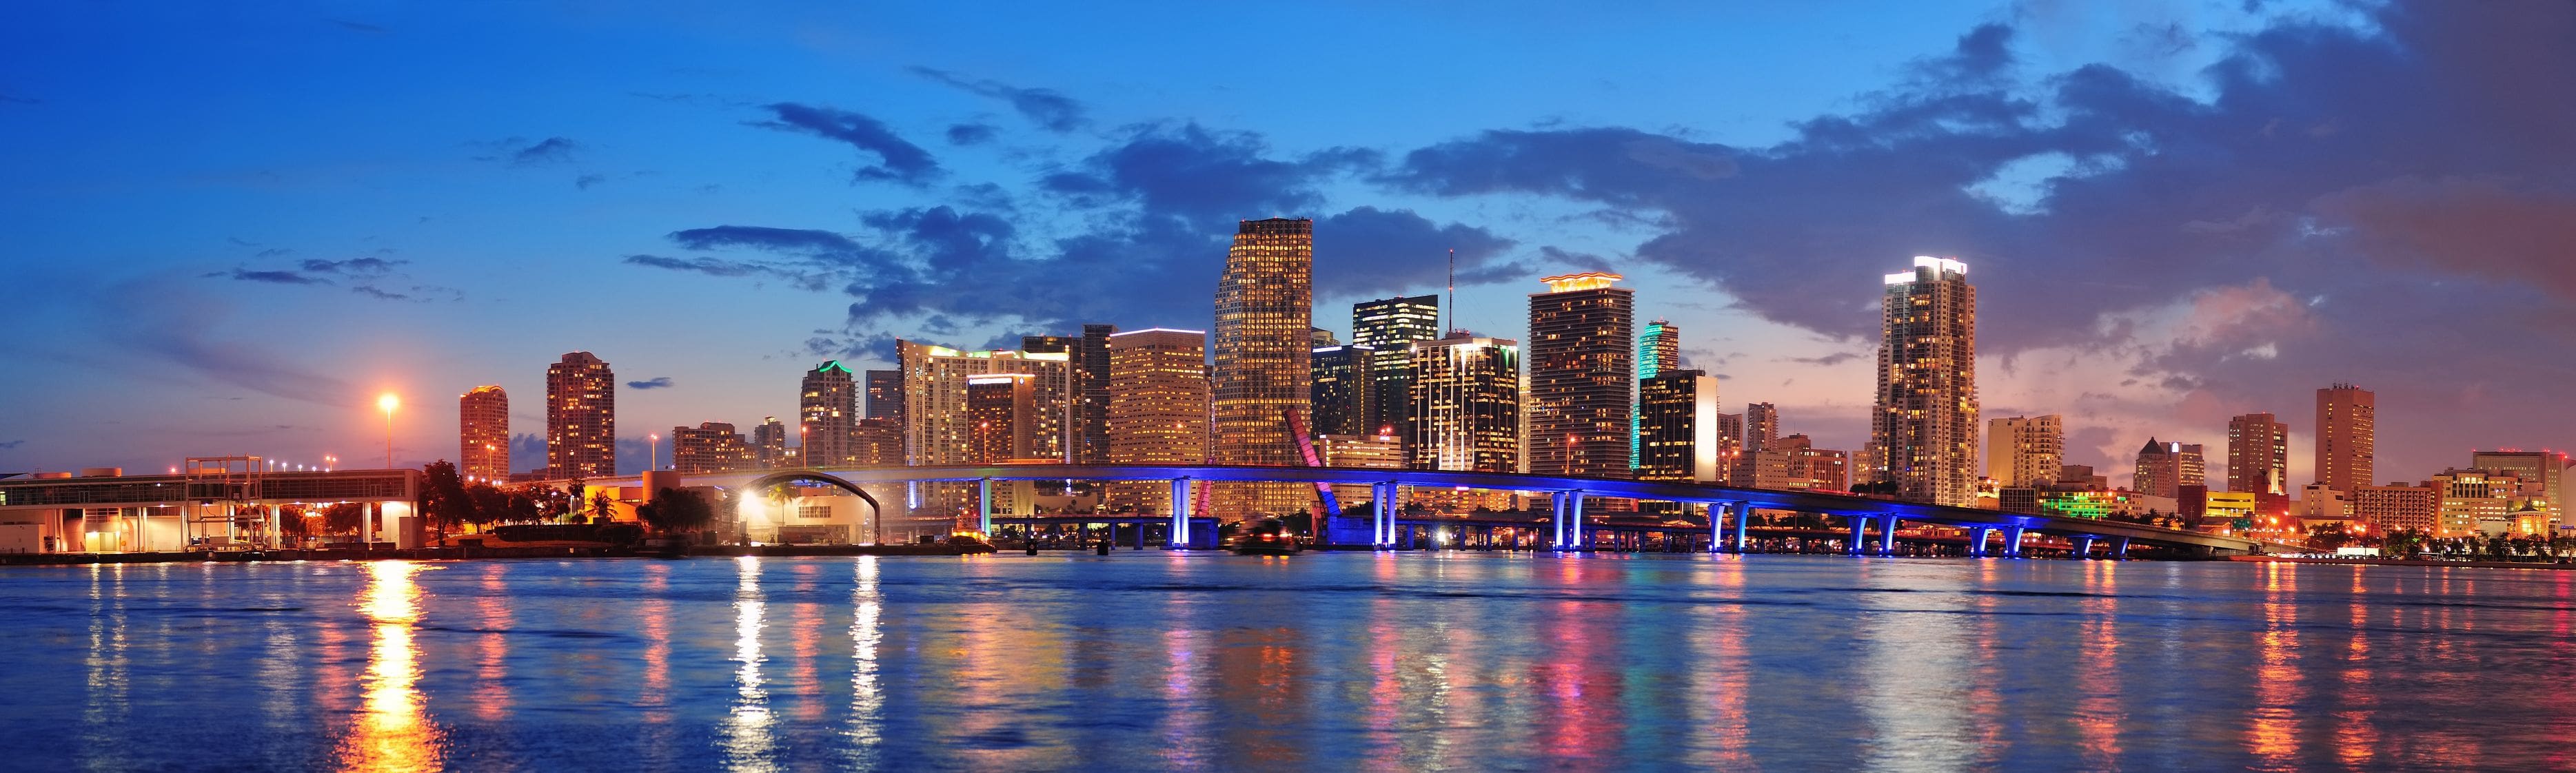 Miami-City-Skyline